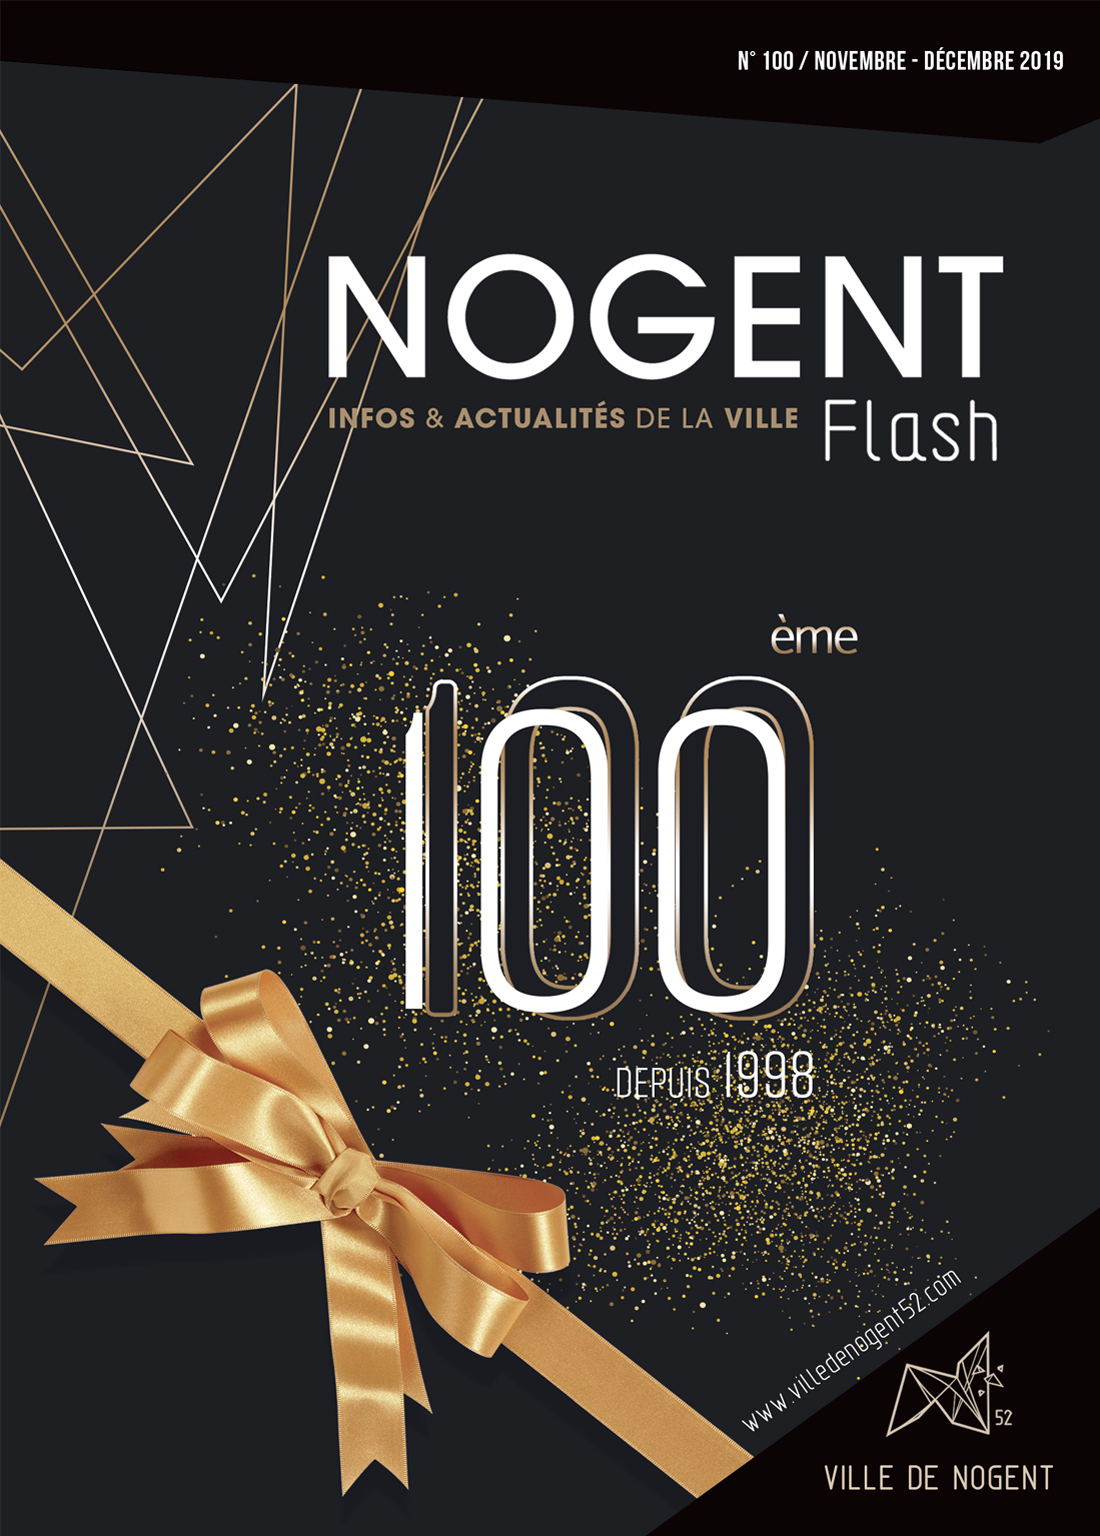 Nogent Flash #100